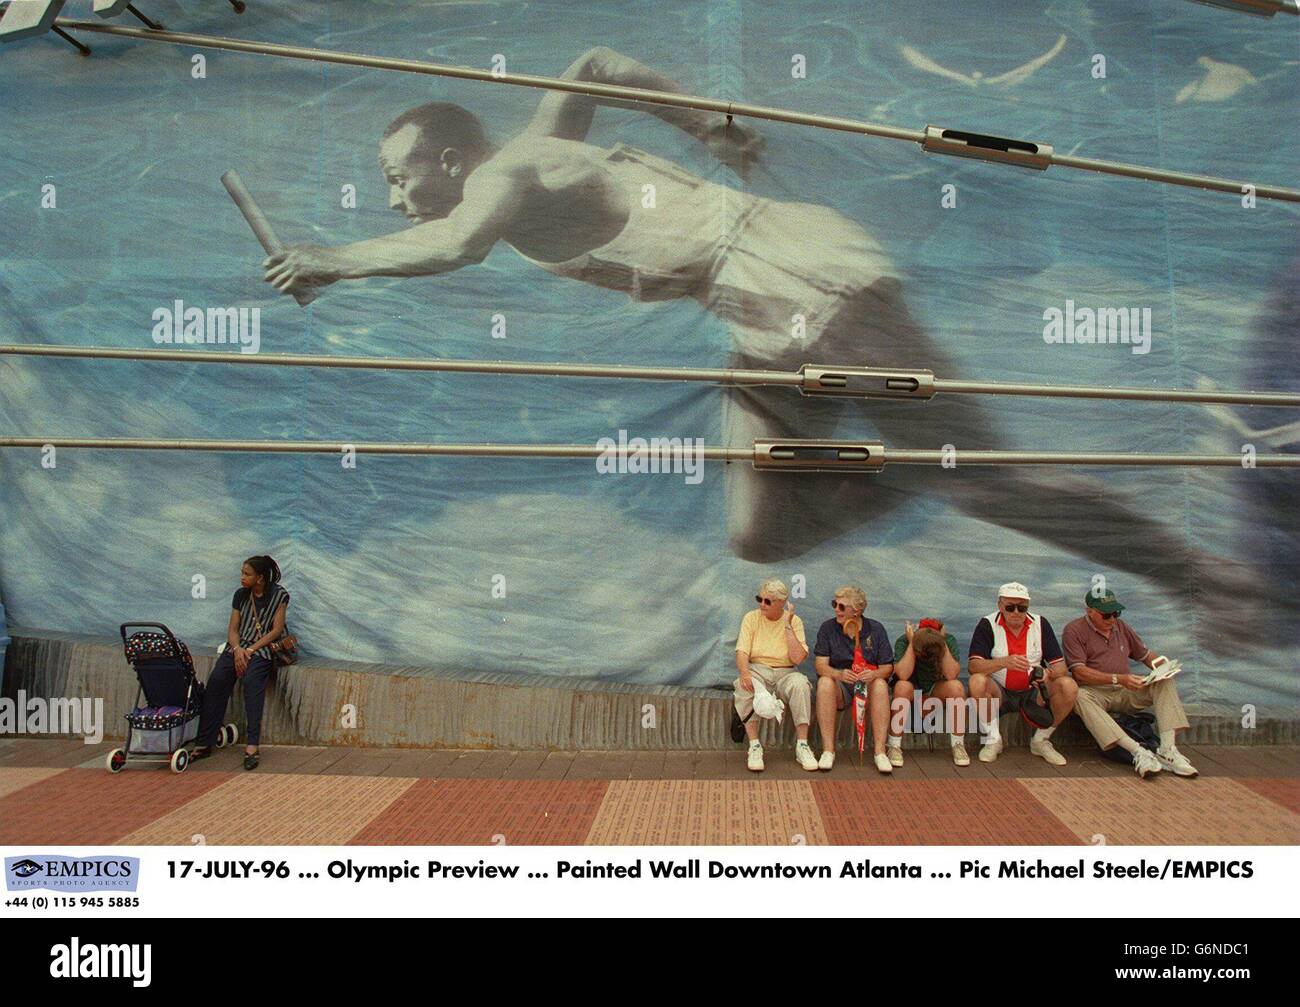 Anteprima Olimpica del centro di Atlanta, Georgia. Painted Wall mostra Jesse Owens - Olimpiadi 1936 Sprint Champion nel relè - Downtown Atlanta Foto Stock